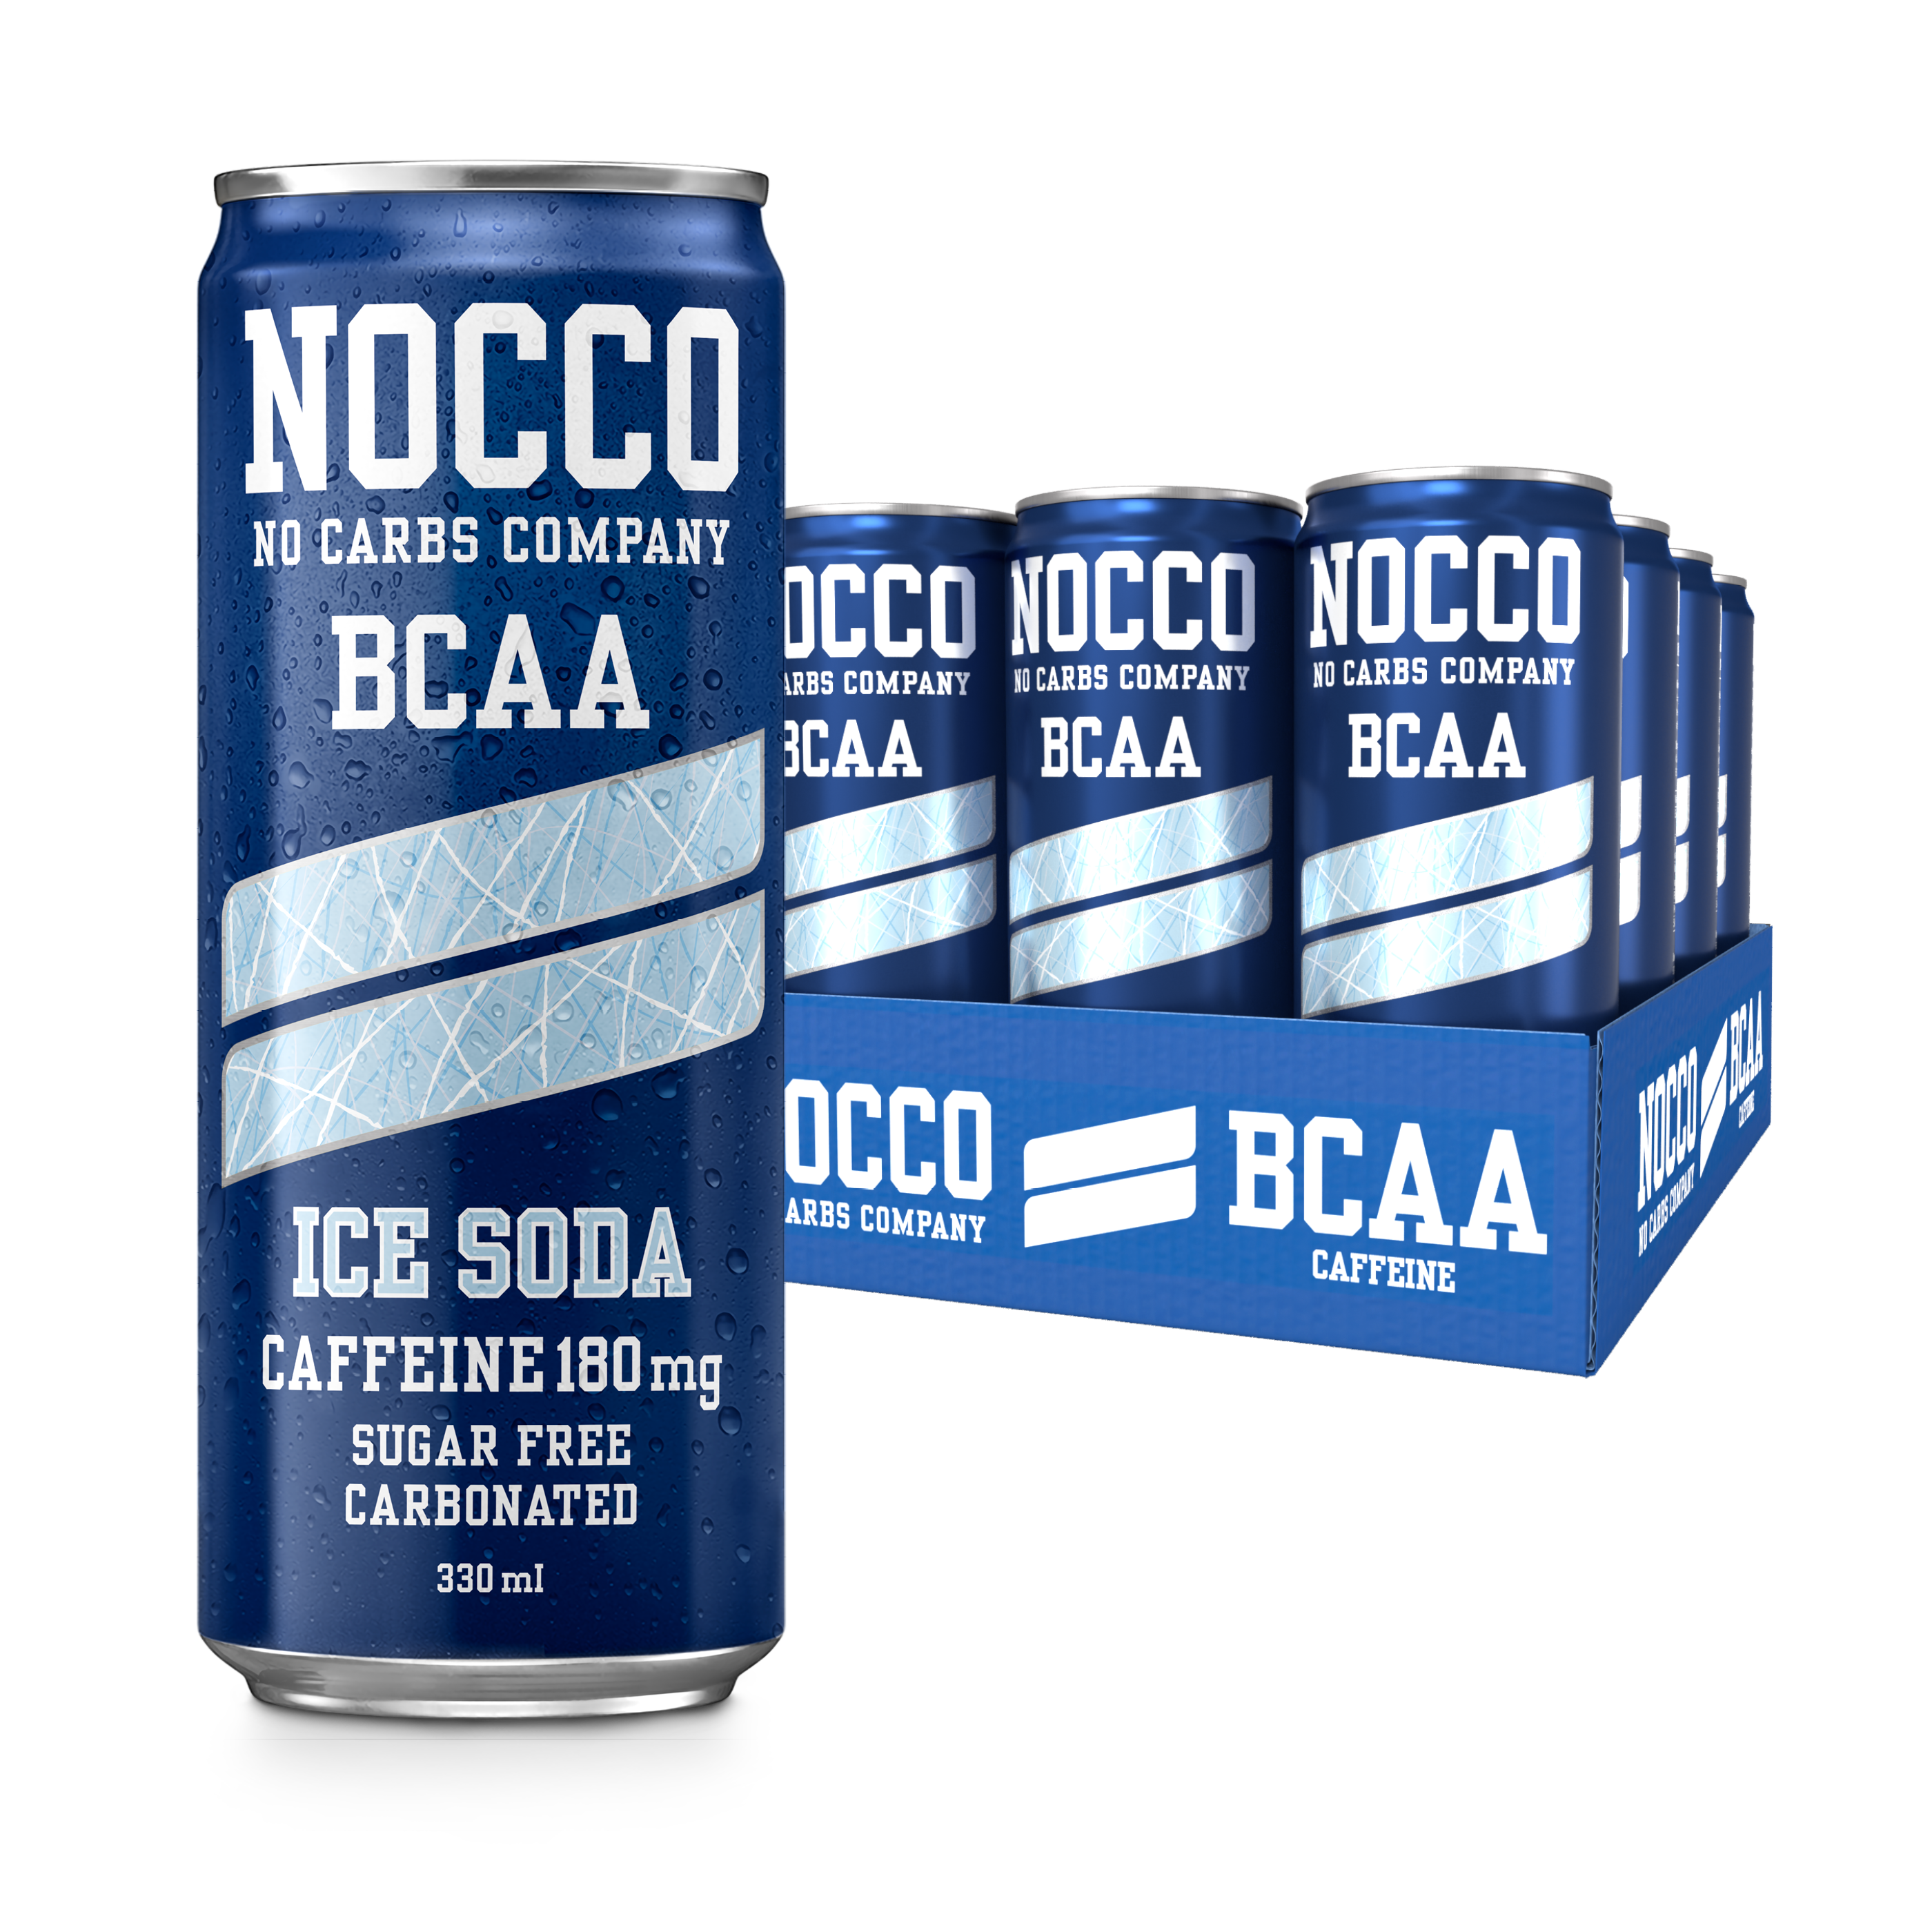 Nocco Ice soda 12 pack case